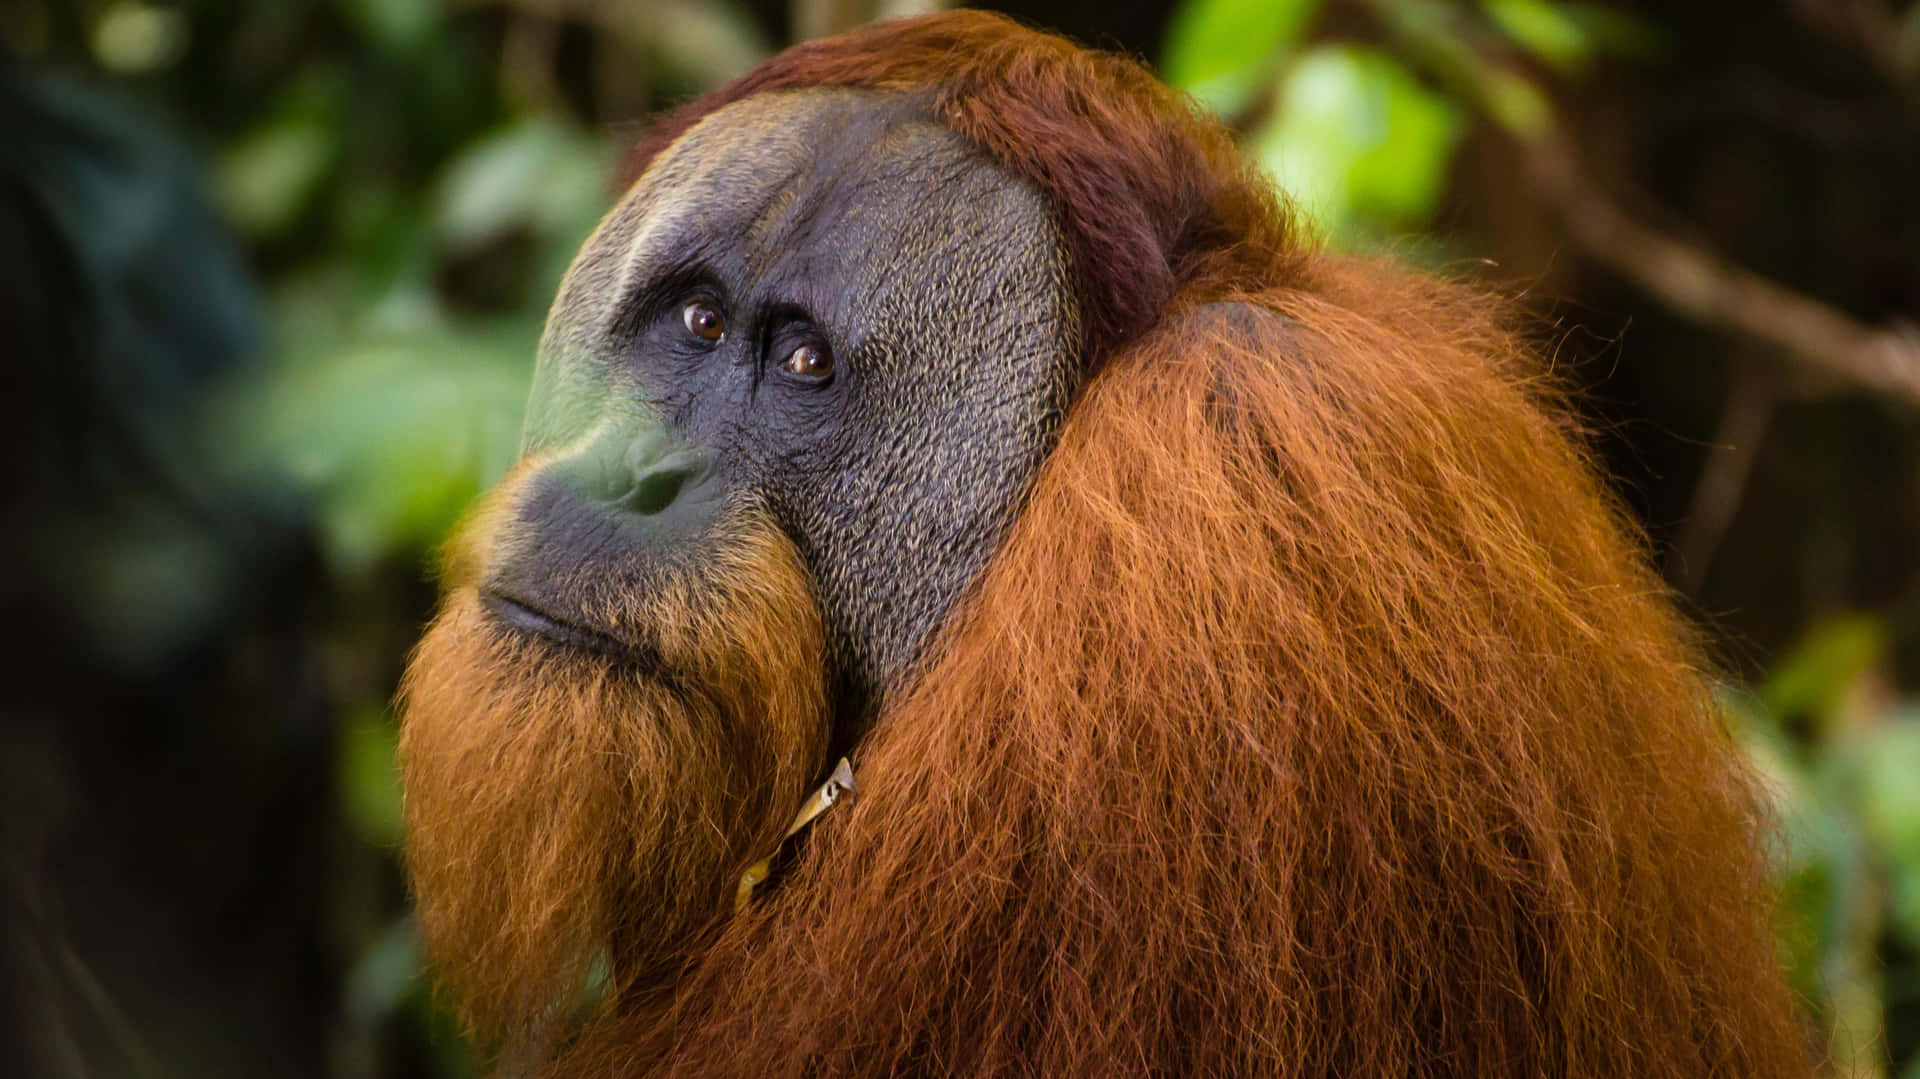 Her Majestic Swing: An Orangutan Enjoying the Nature